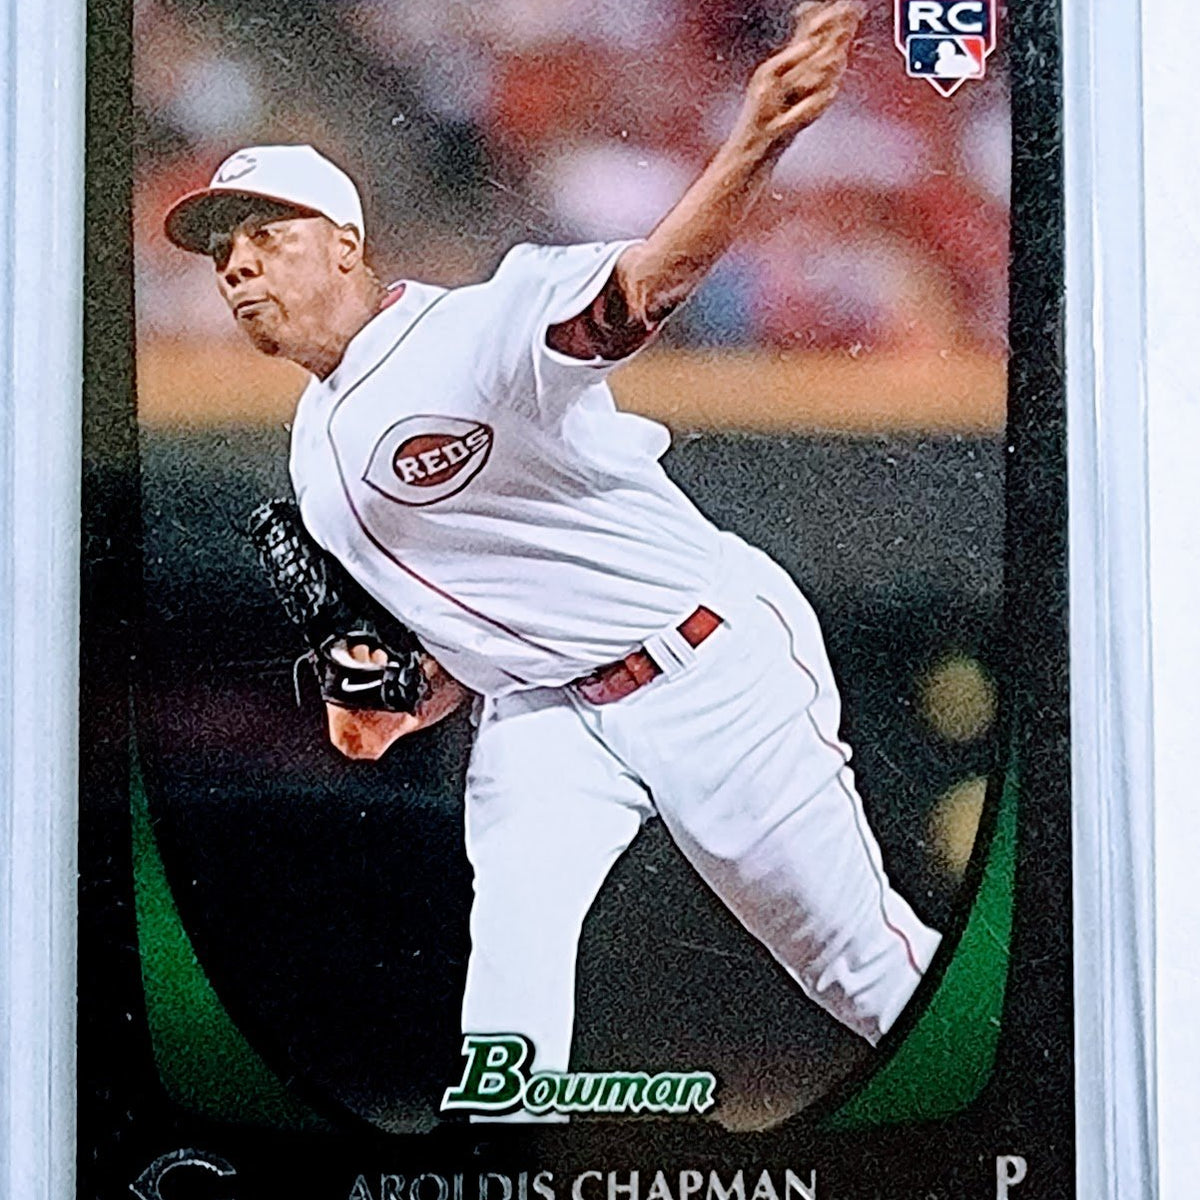 2011 Bowman Aroldis Chapman Rookie Baseball Card TPTV